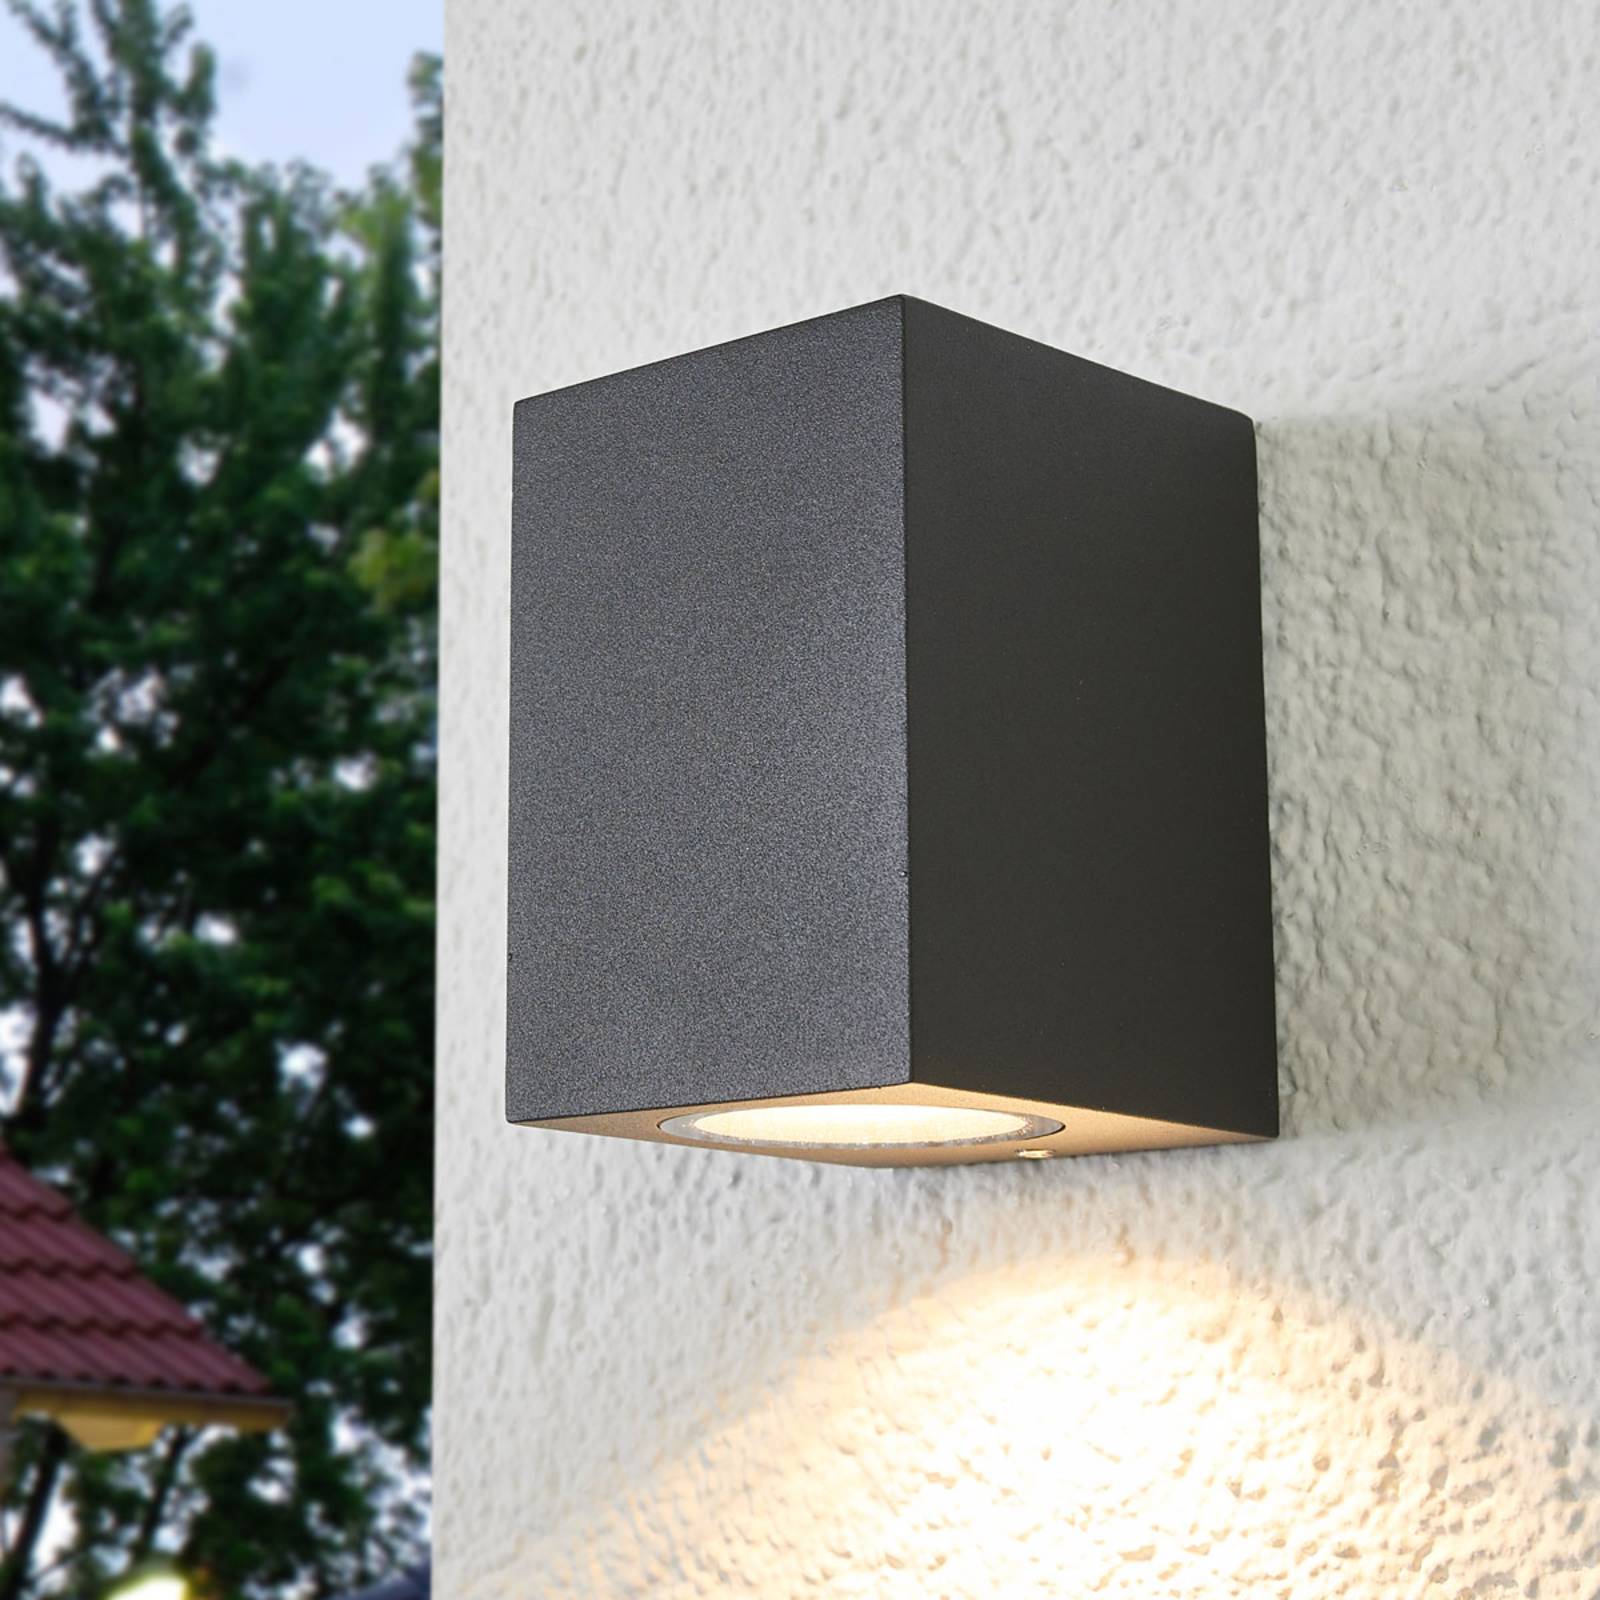 Xava outdoor wall lamp, downward-shining light